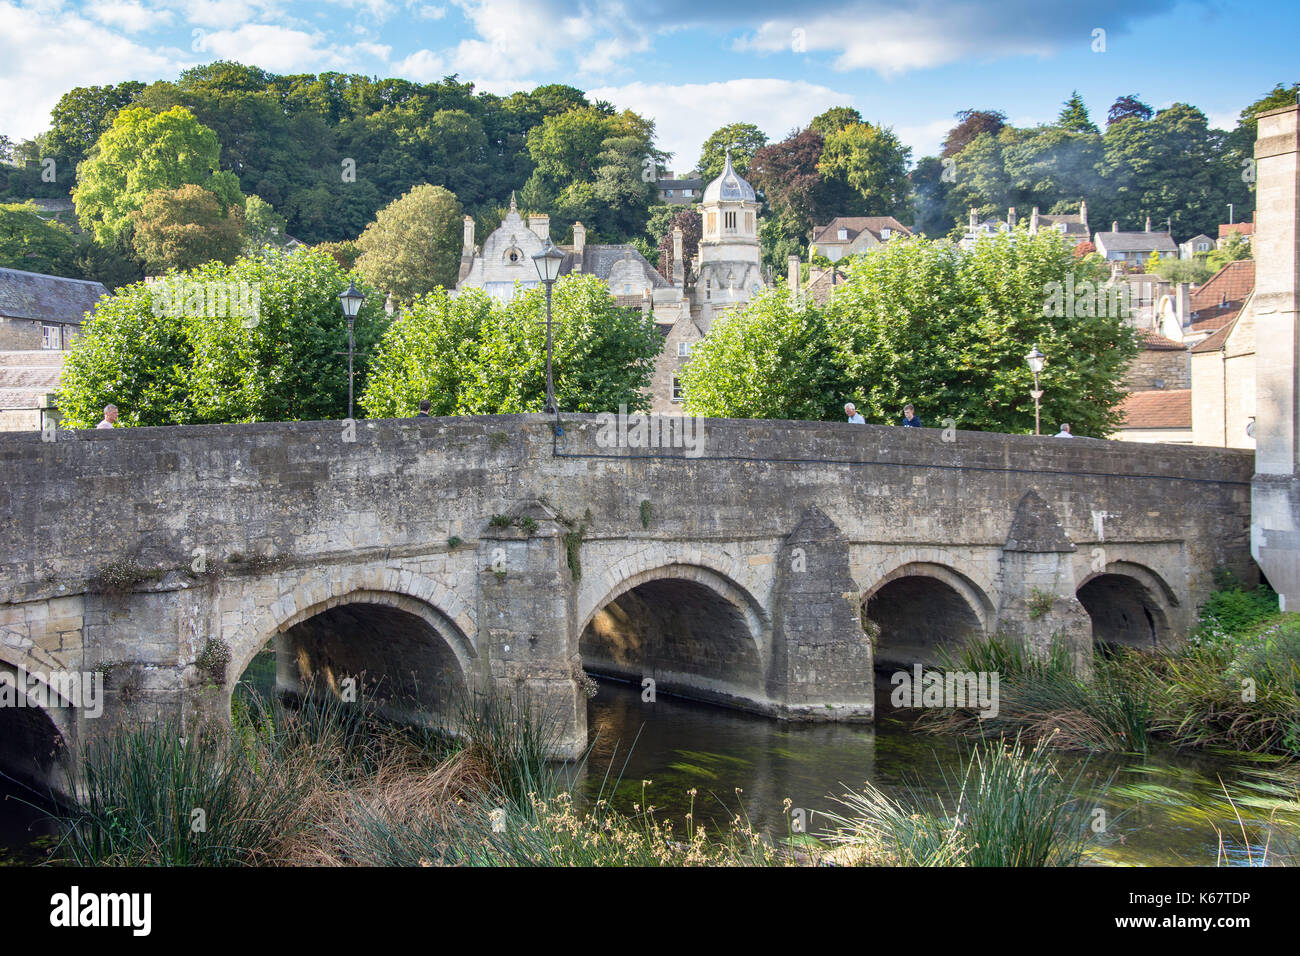 Town Bridge over River Avon, Bradford-on-Avon, Wiltshire, England, United Kingdom Stock Photo